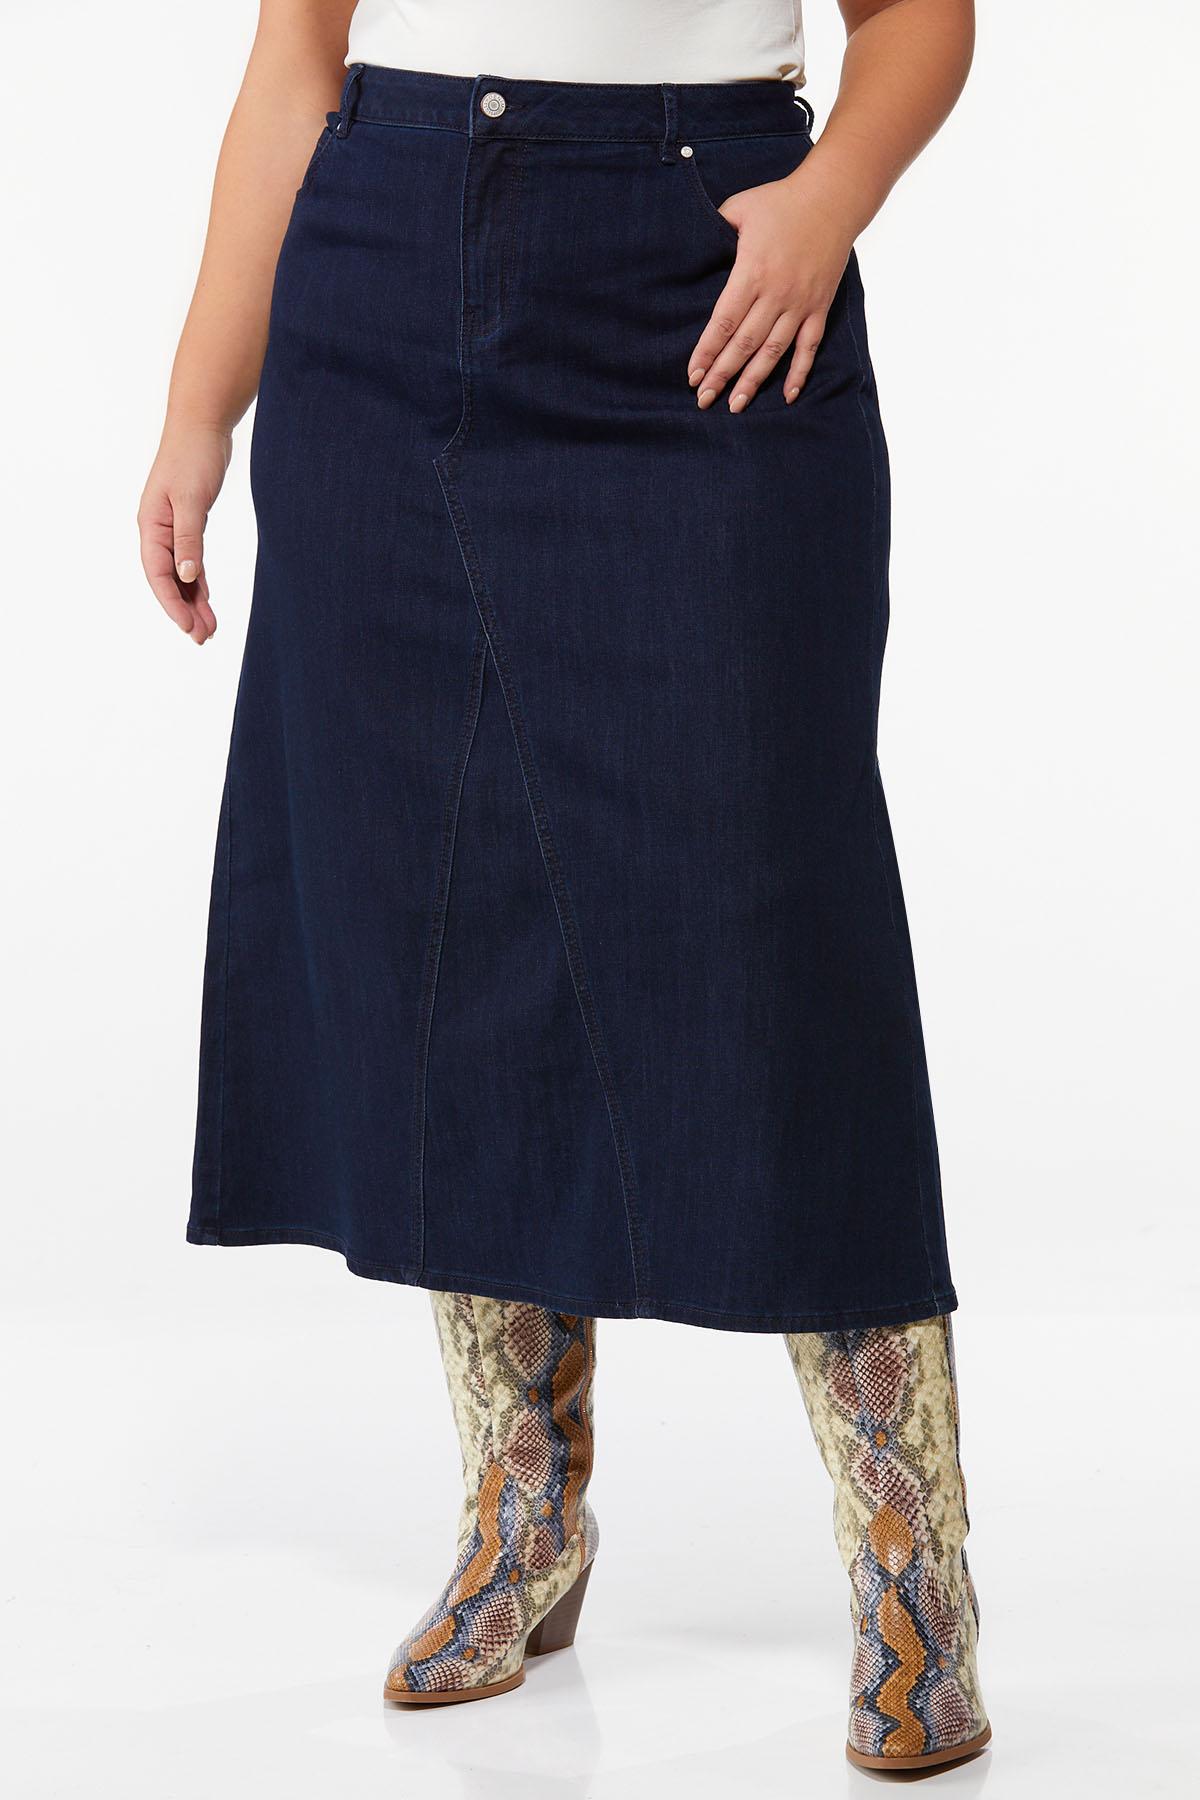 Plus Size Dark Wash Denim Skirt Skirts Cato Fashions